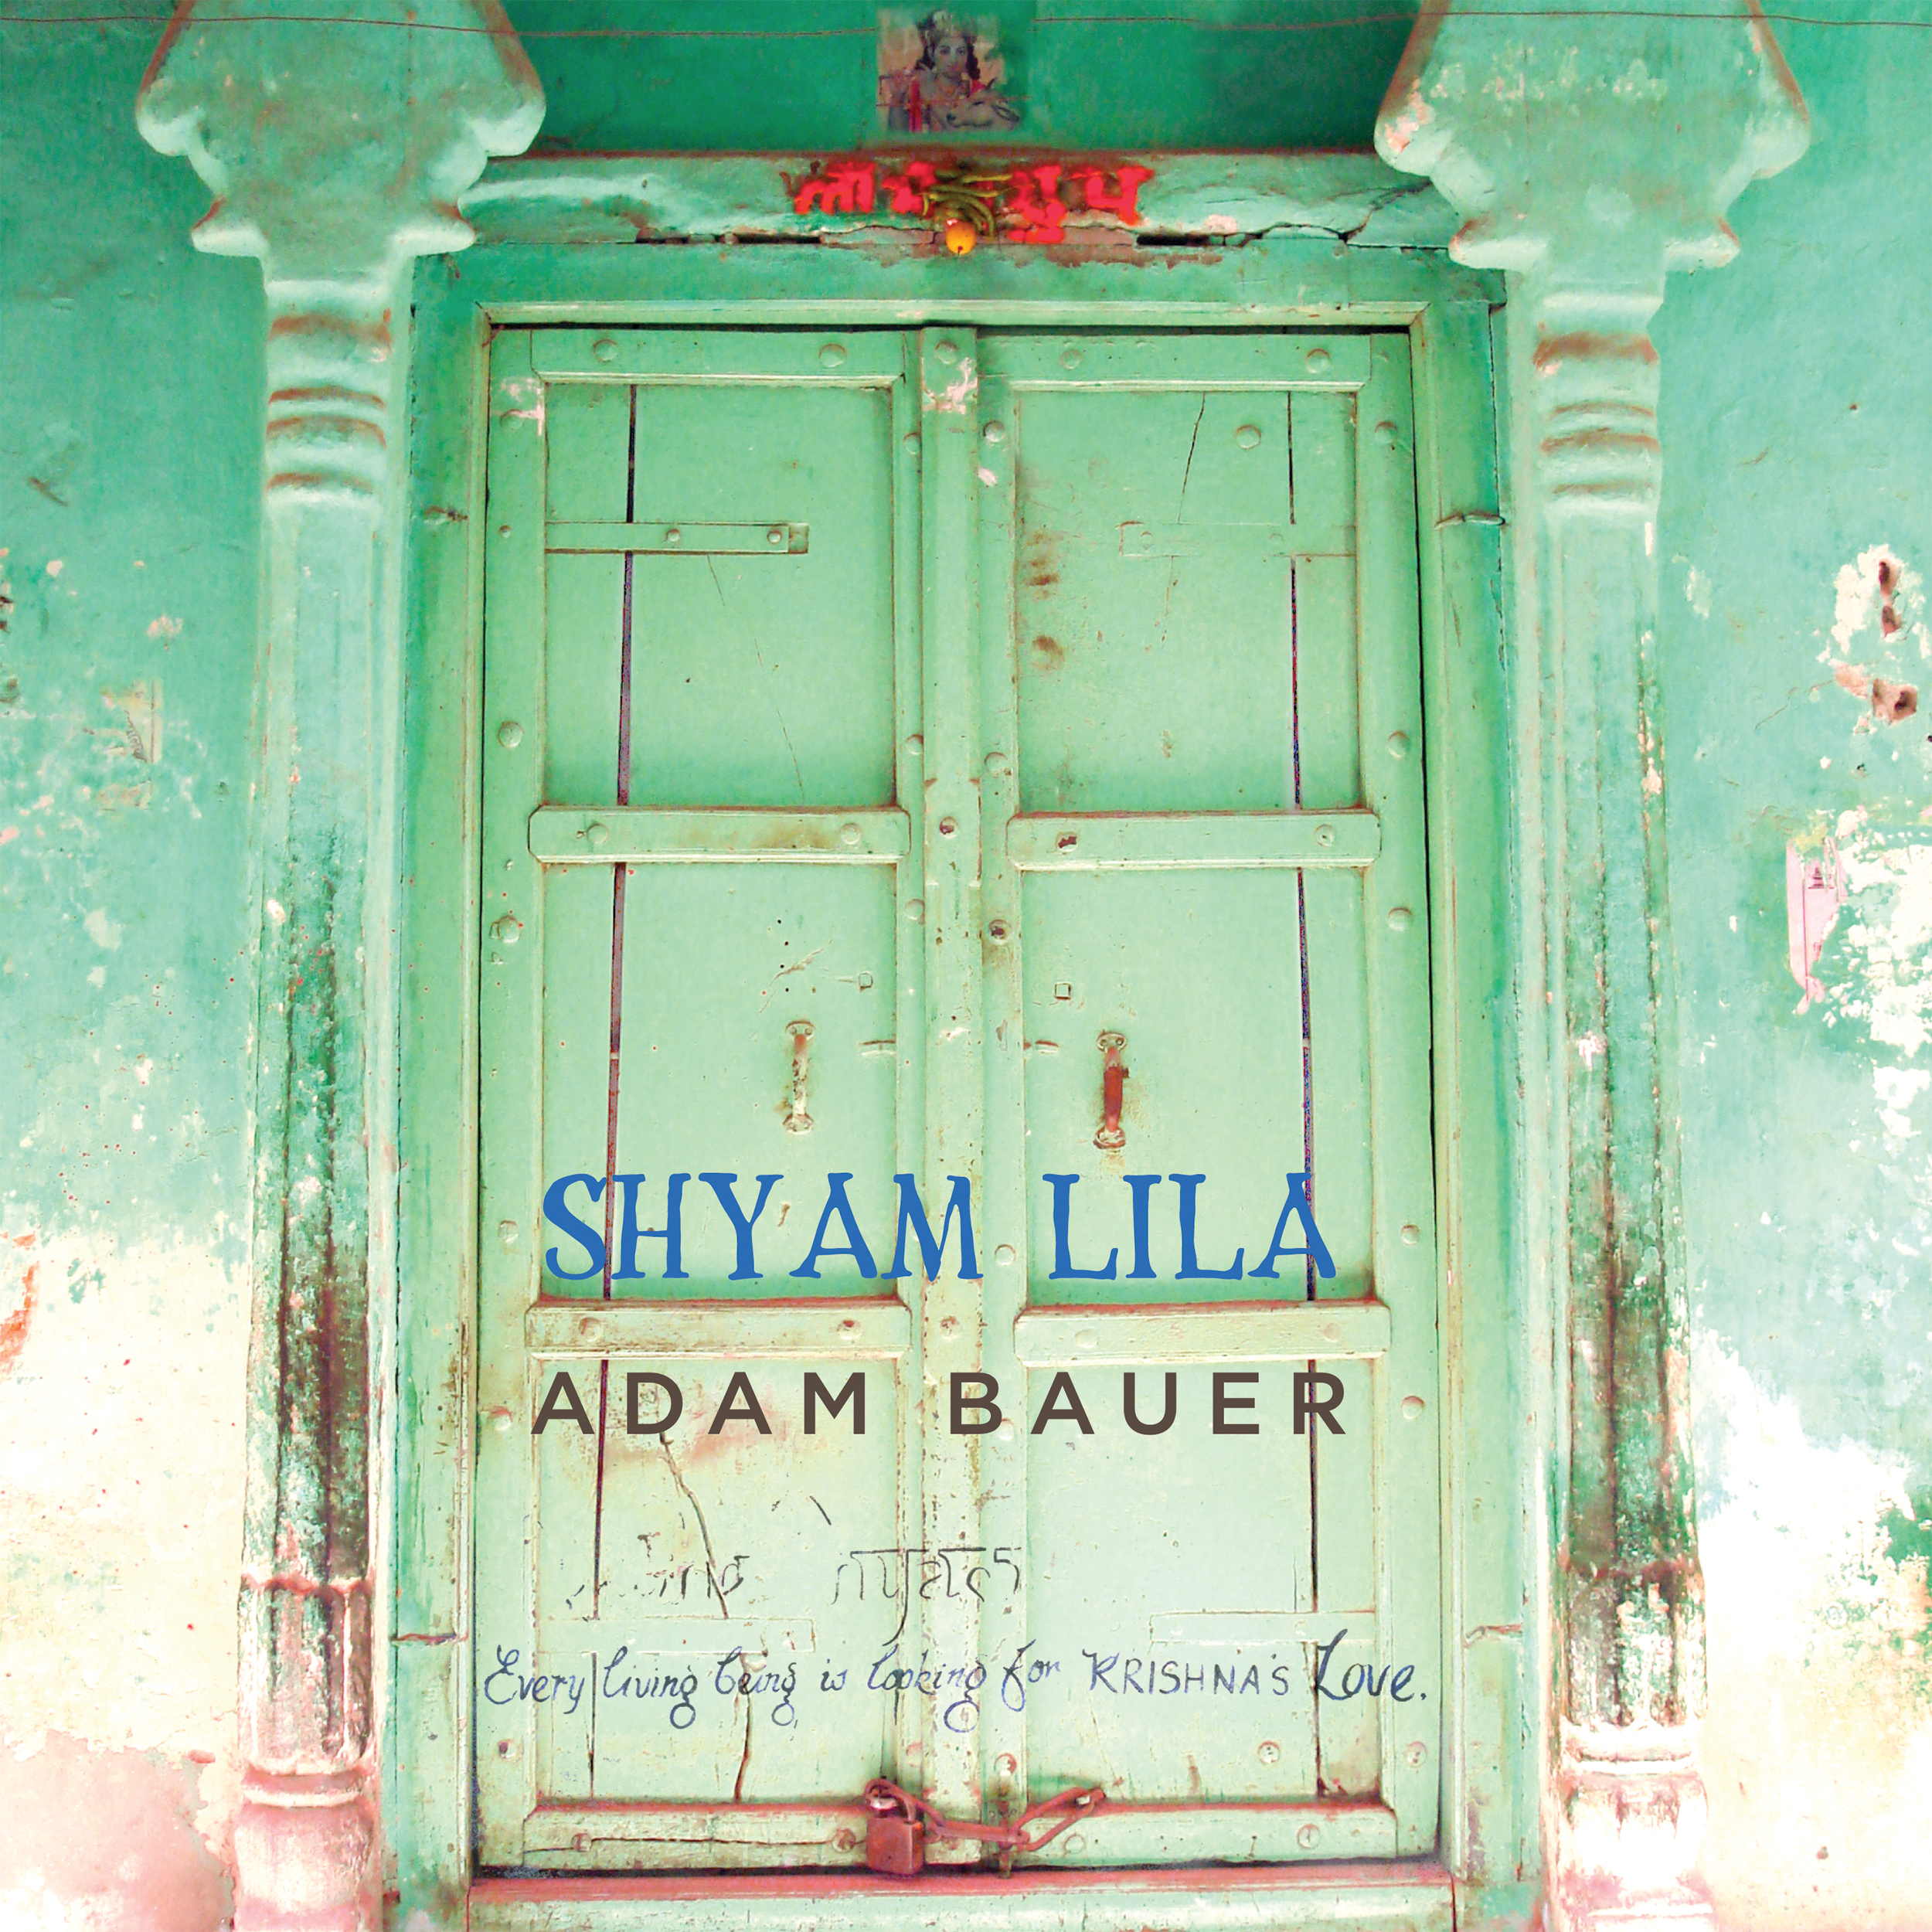 Art for Shyam Lila (Radhe Shyam) by Adam Bauer